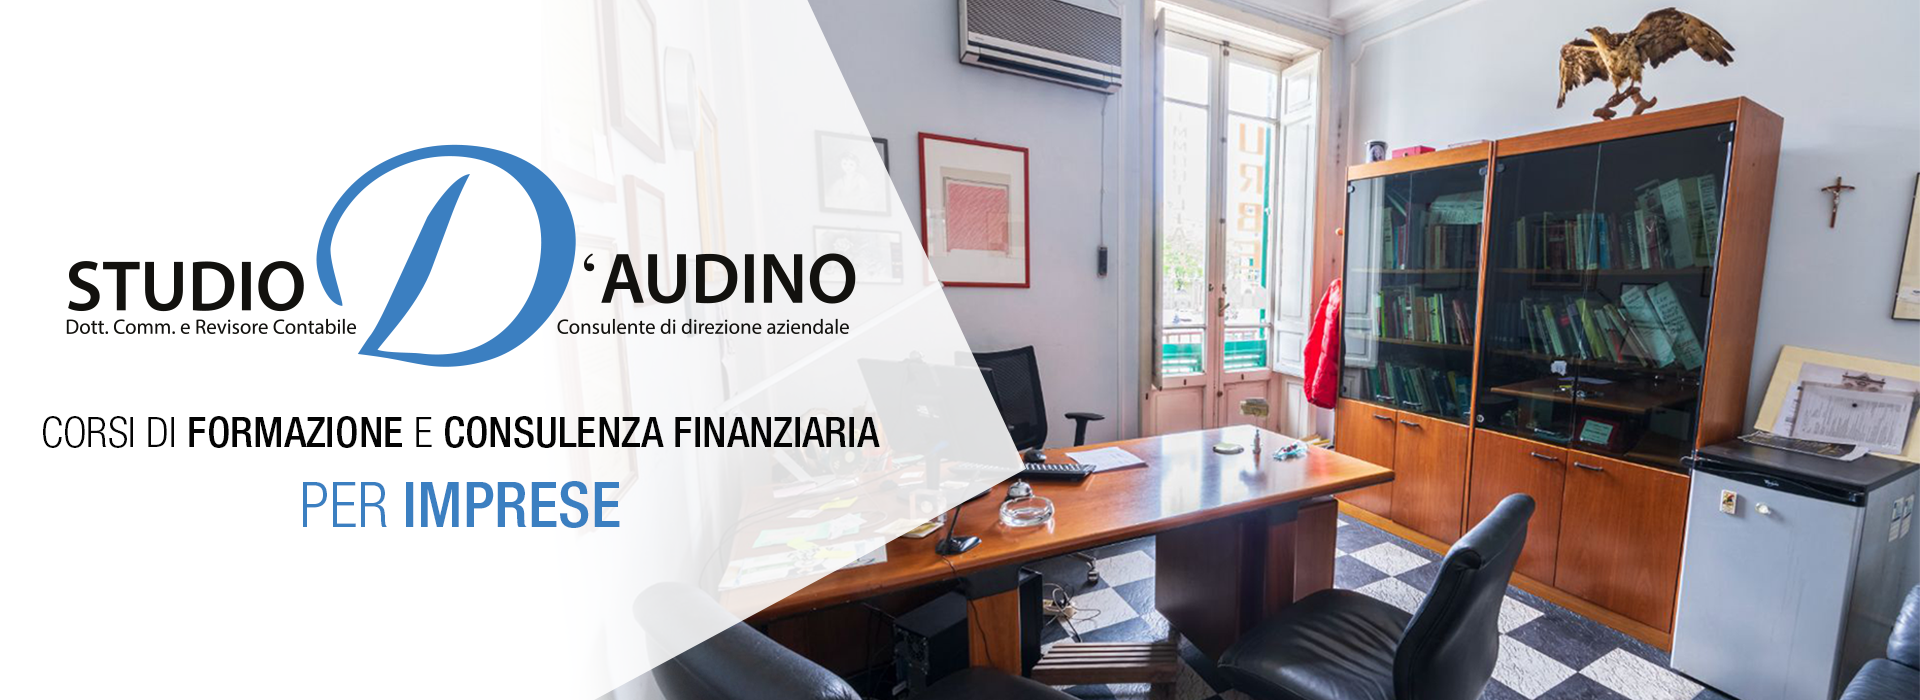 Pronto Azienda Studio d'Audino